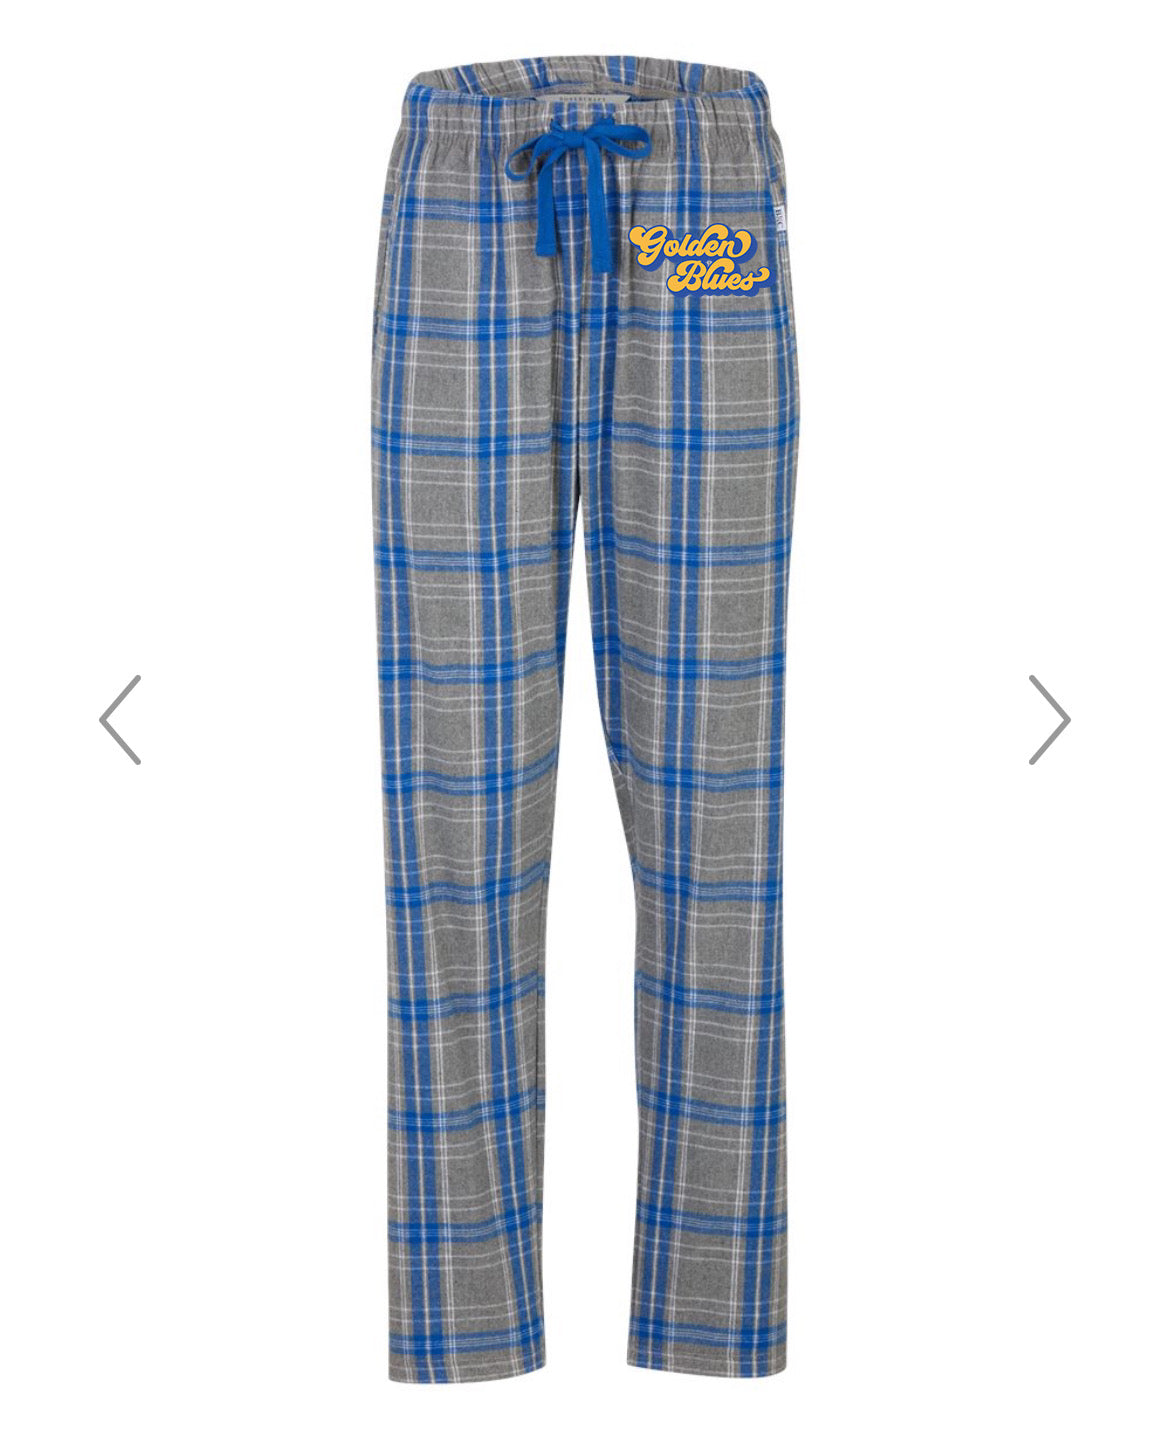 Golden Blues Flannel Pajama Pants